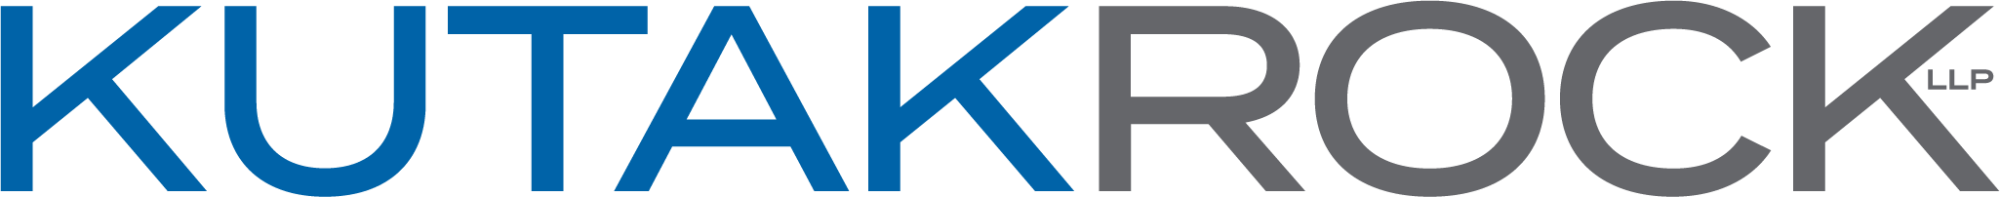 Kutak-Rock-Logo-Standard-with-LLP